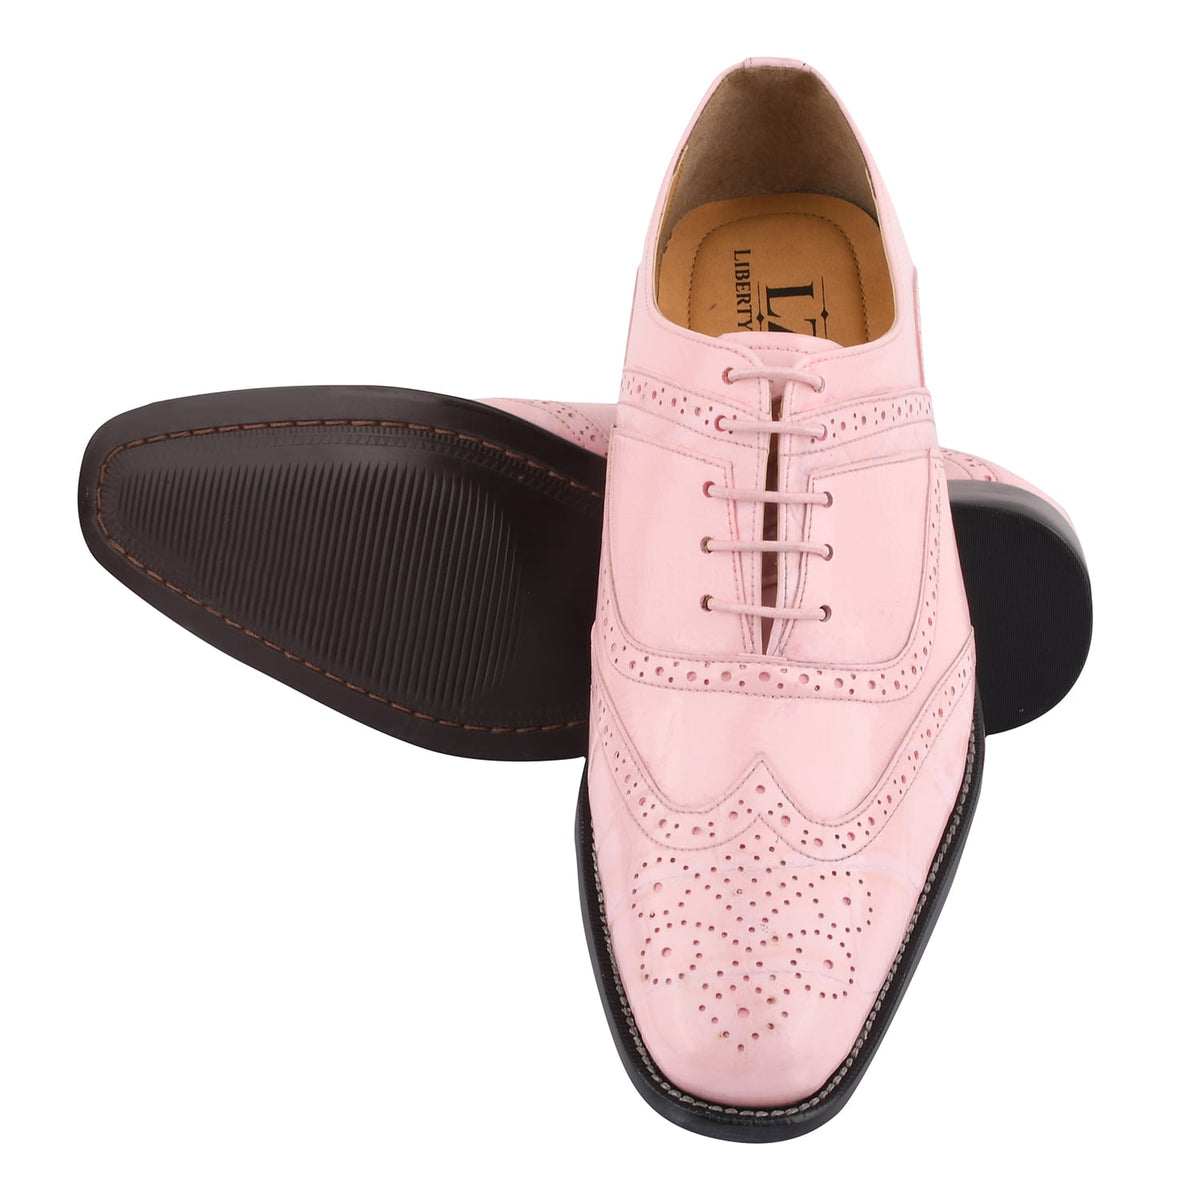 mens pink dress shoes